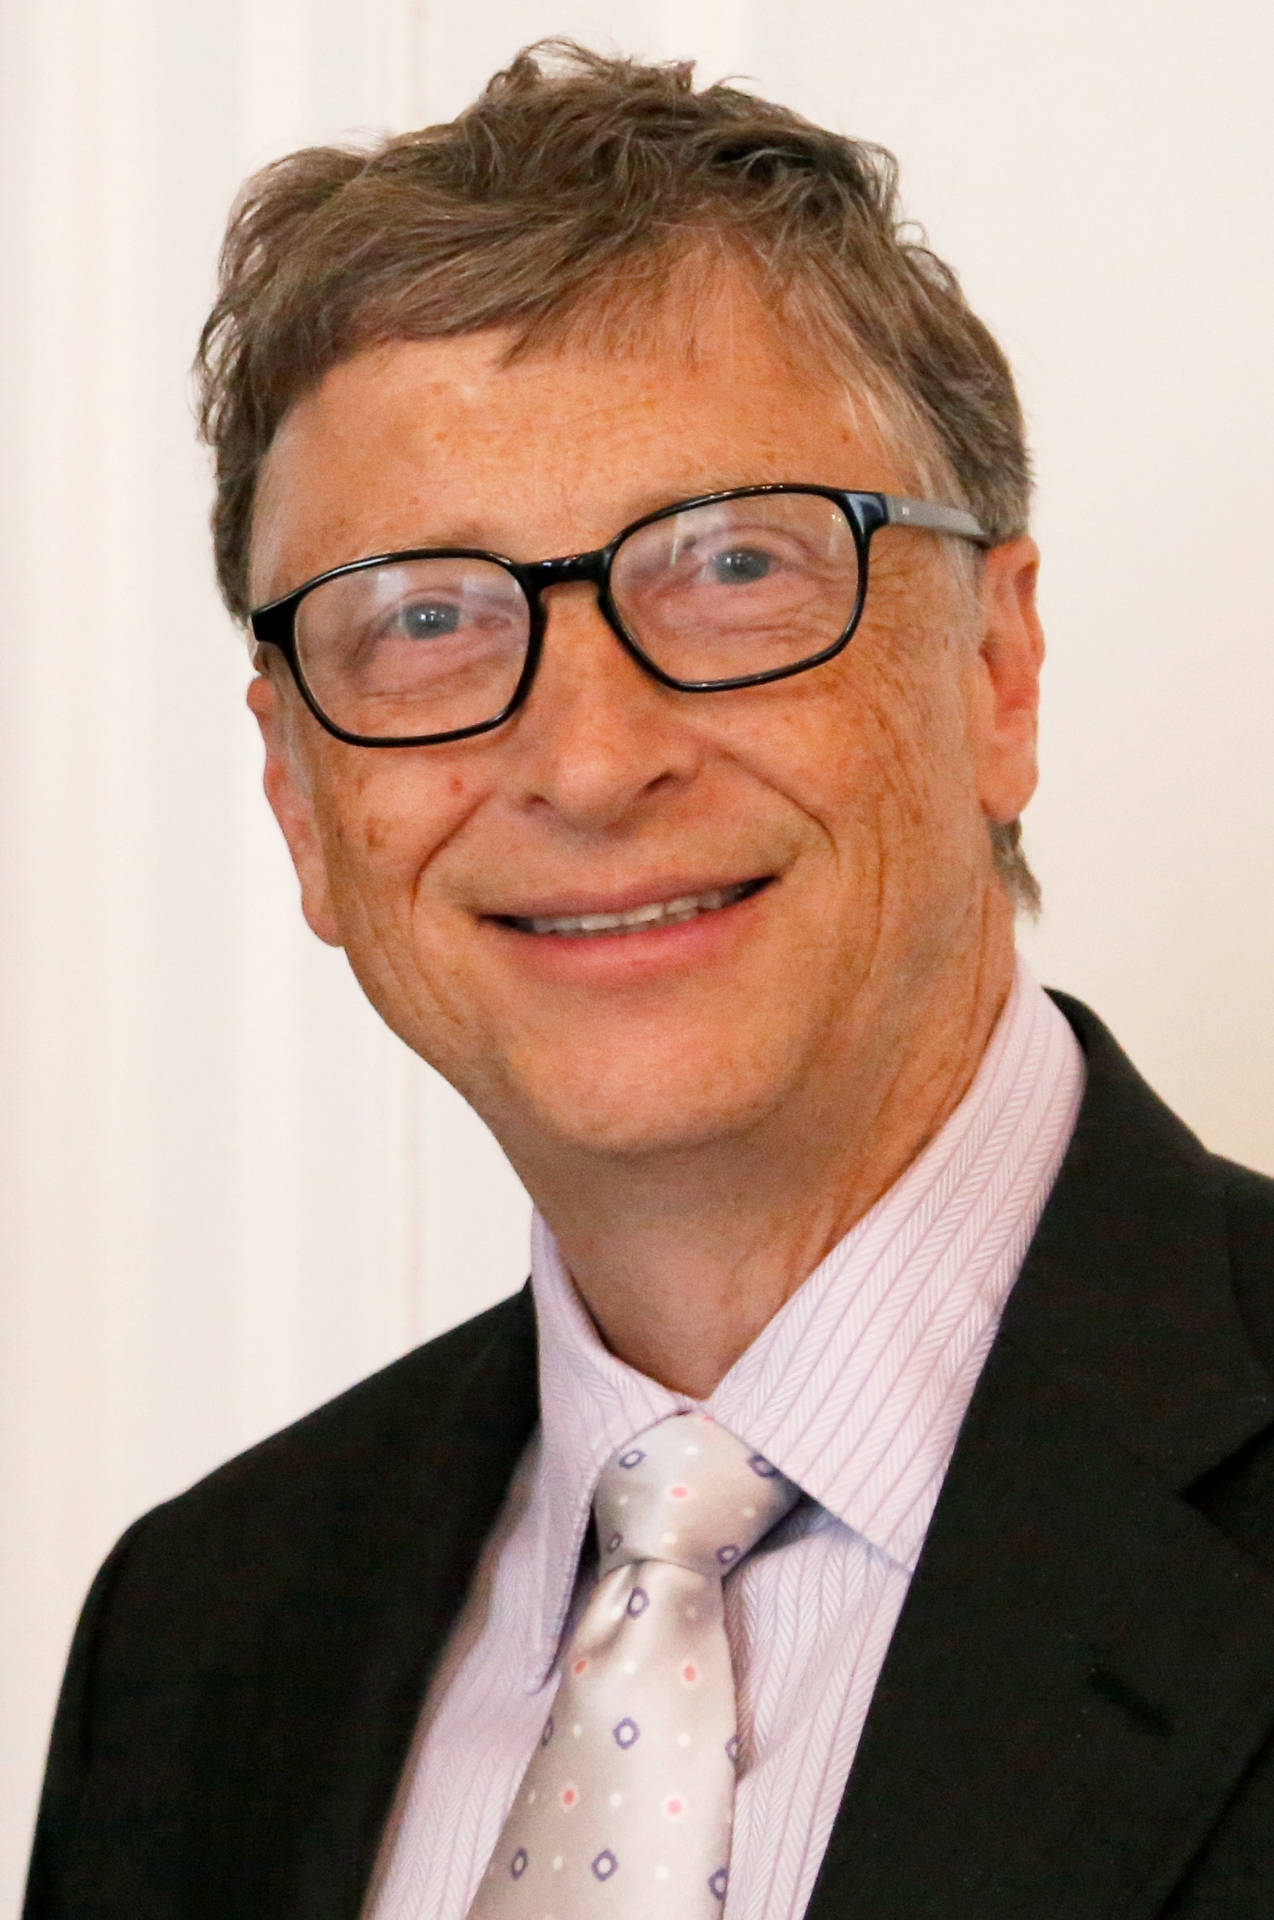 Bill Gates Software Developer